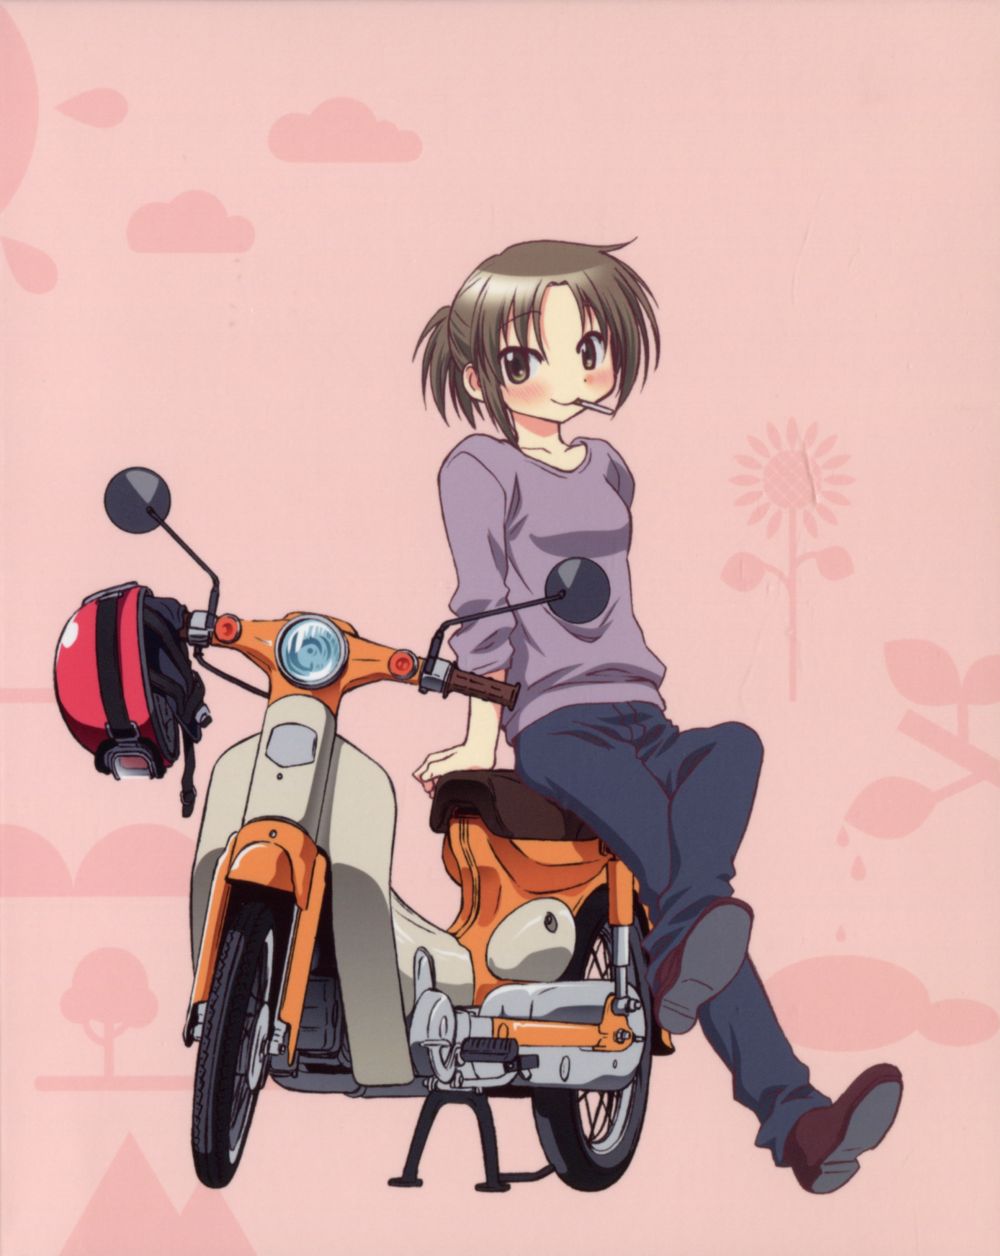 [Secondary] 可愛kattari, sometimes to cool girls riding bikes pictures 35